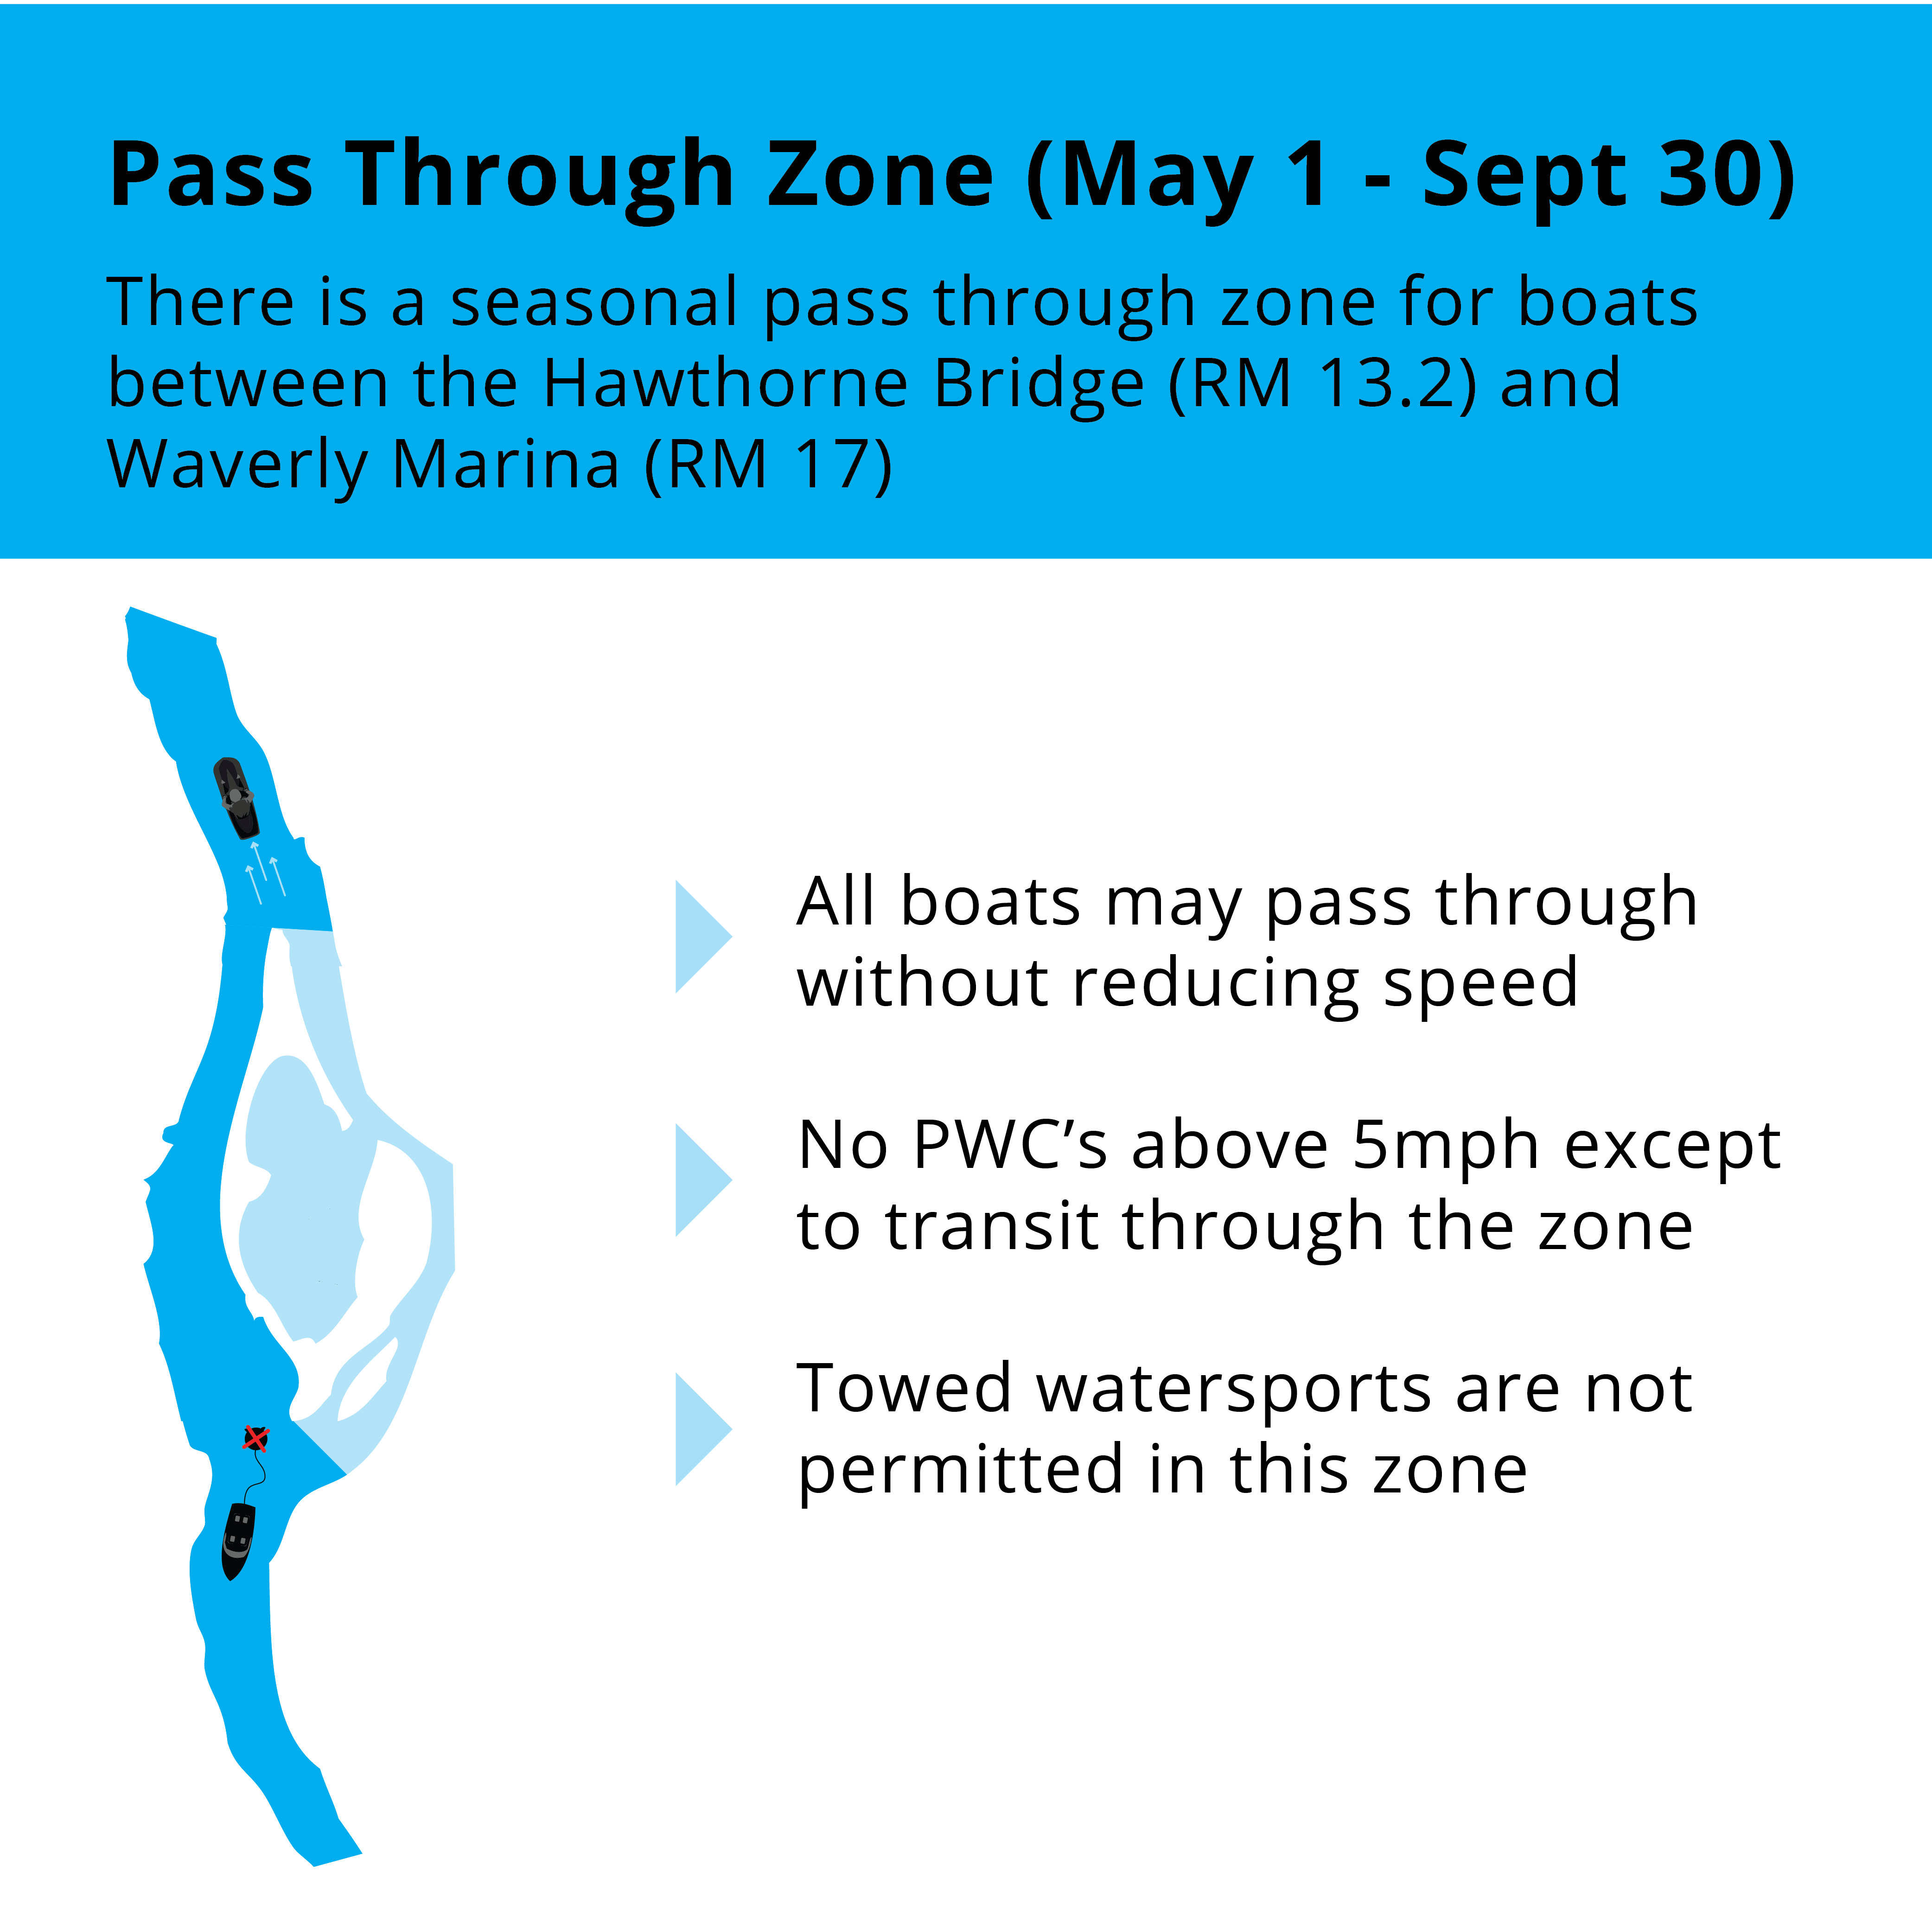 Information on seasonal pass through zone